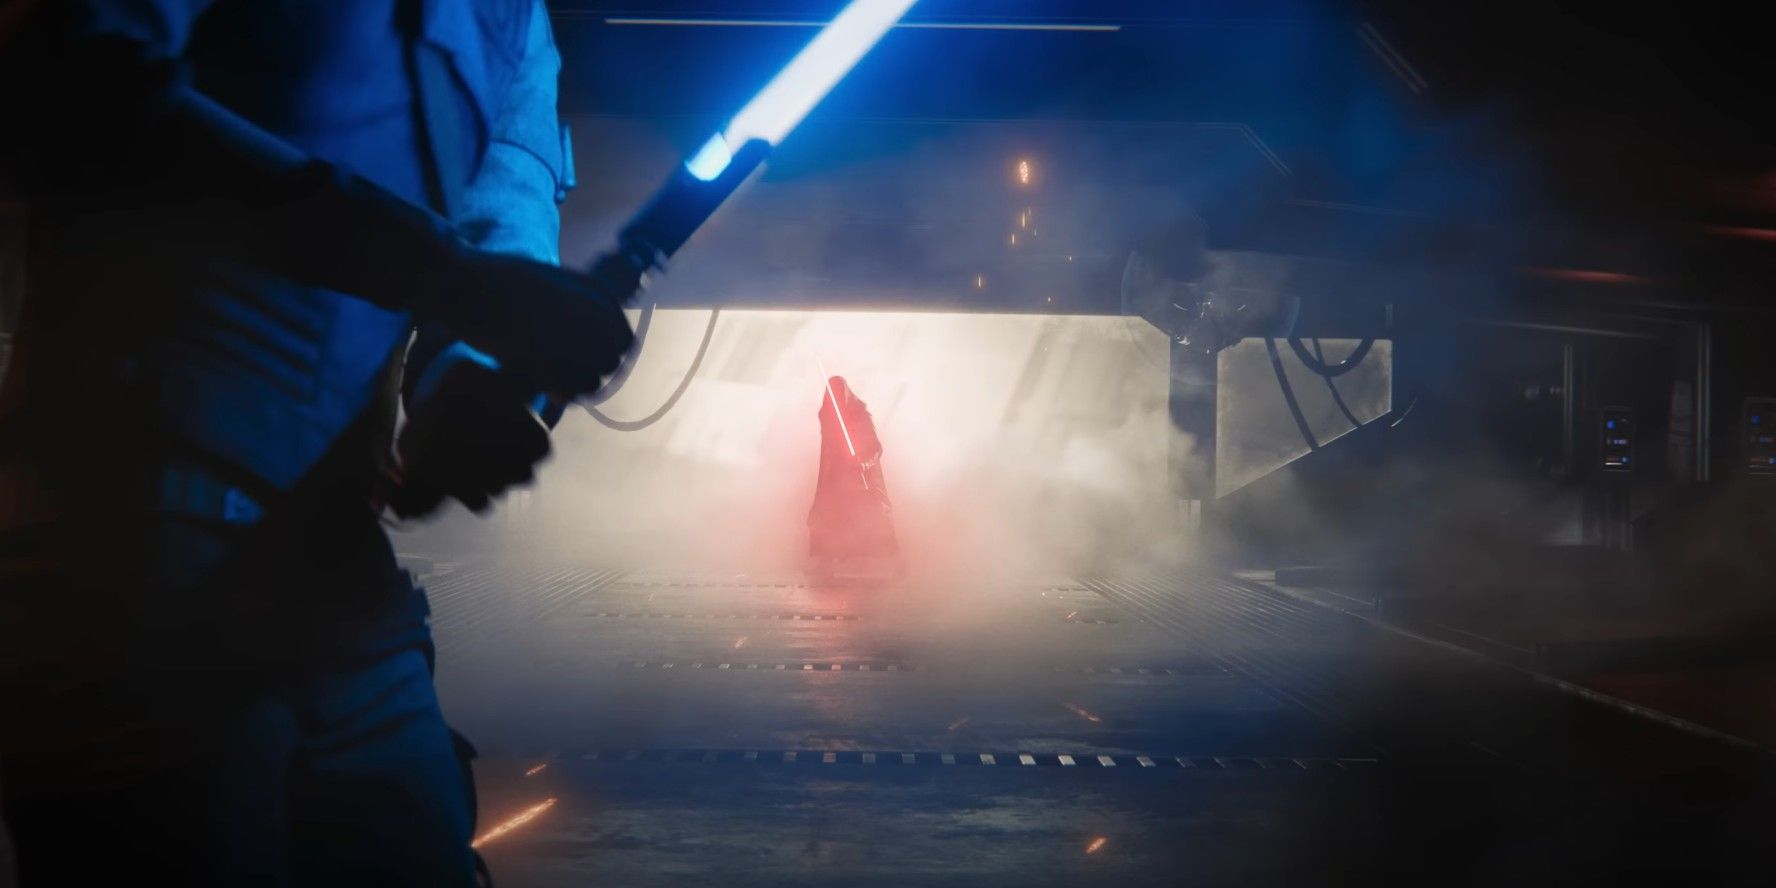 Star Wars Jedi: Survivor - Official Teaser Trailer